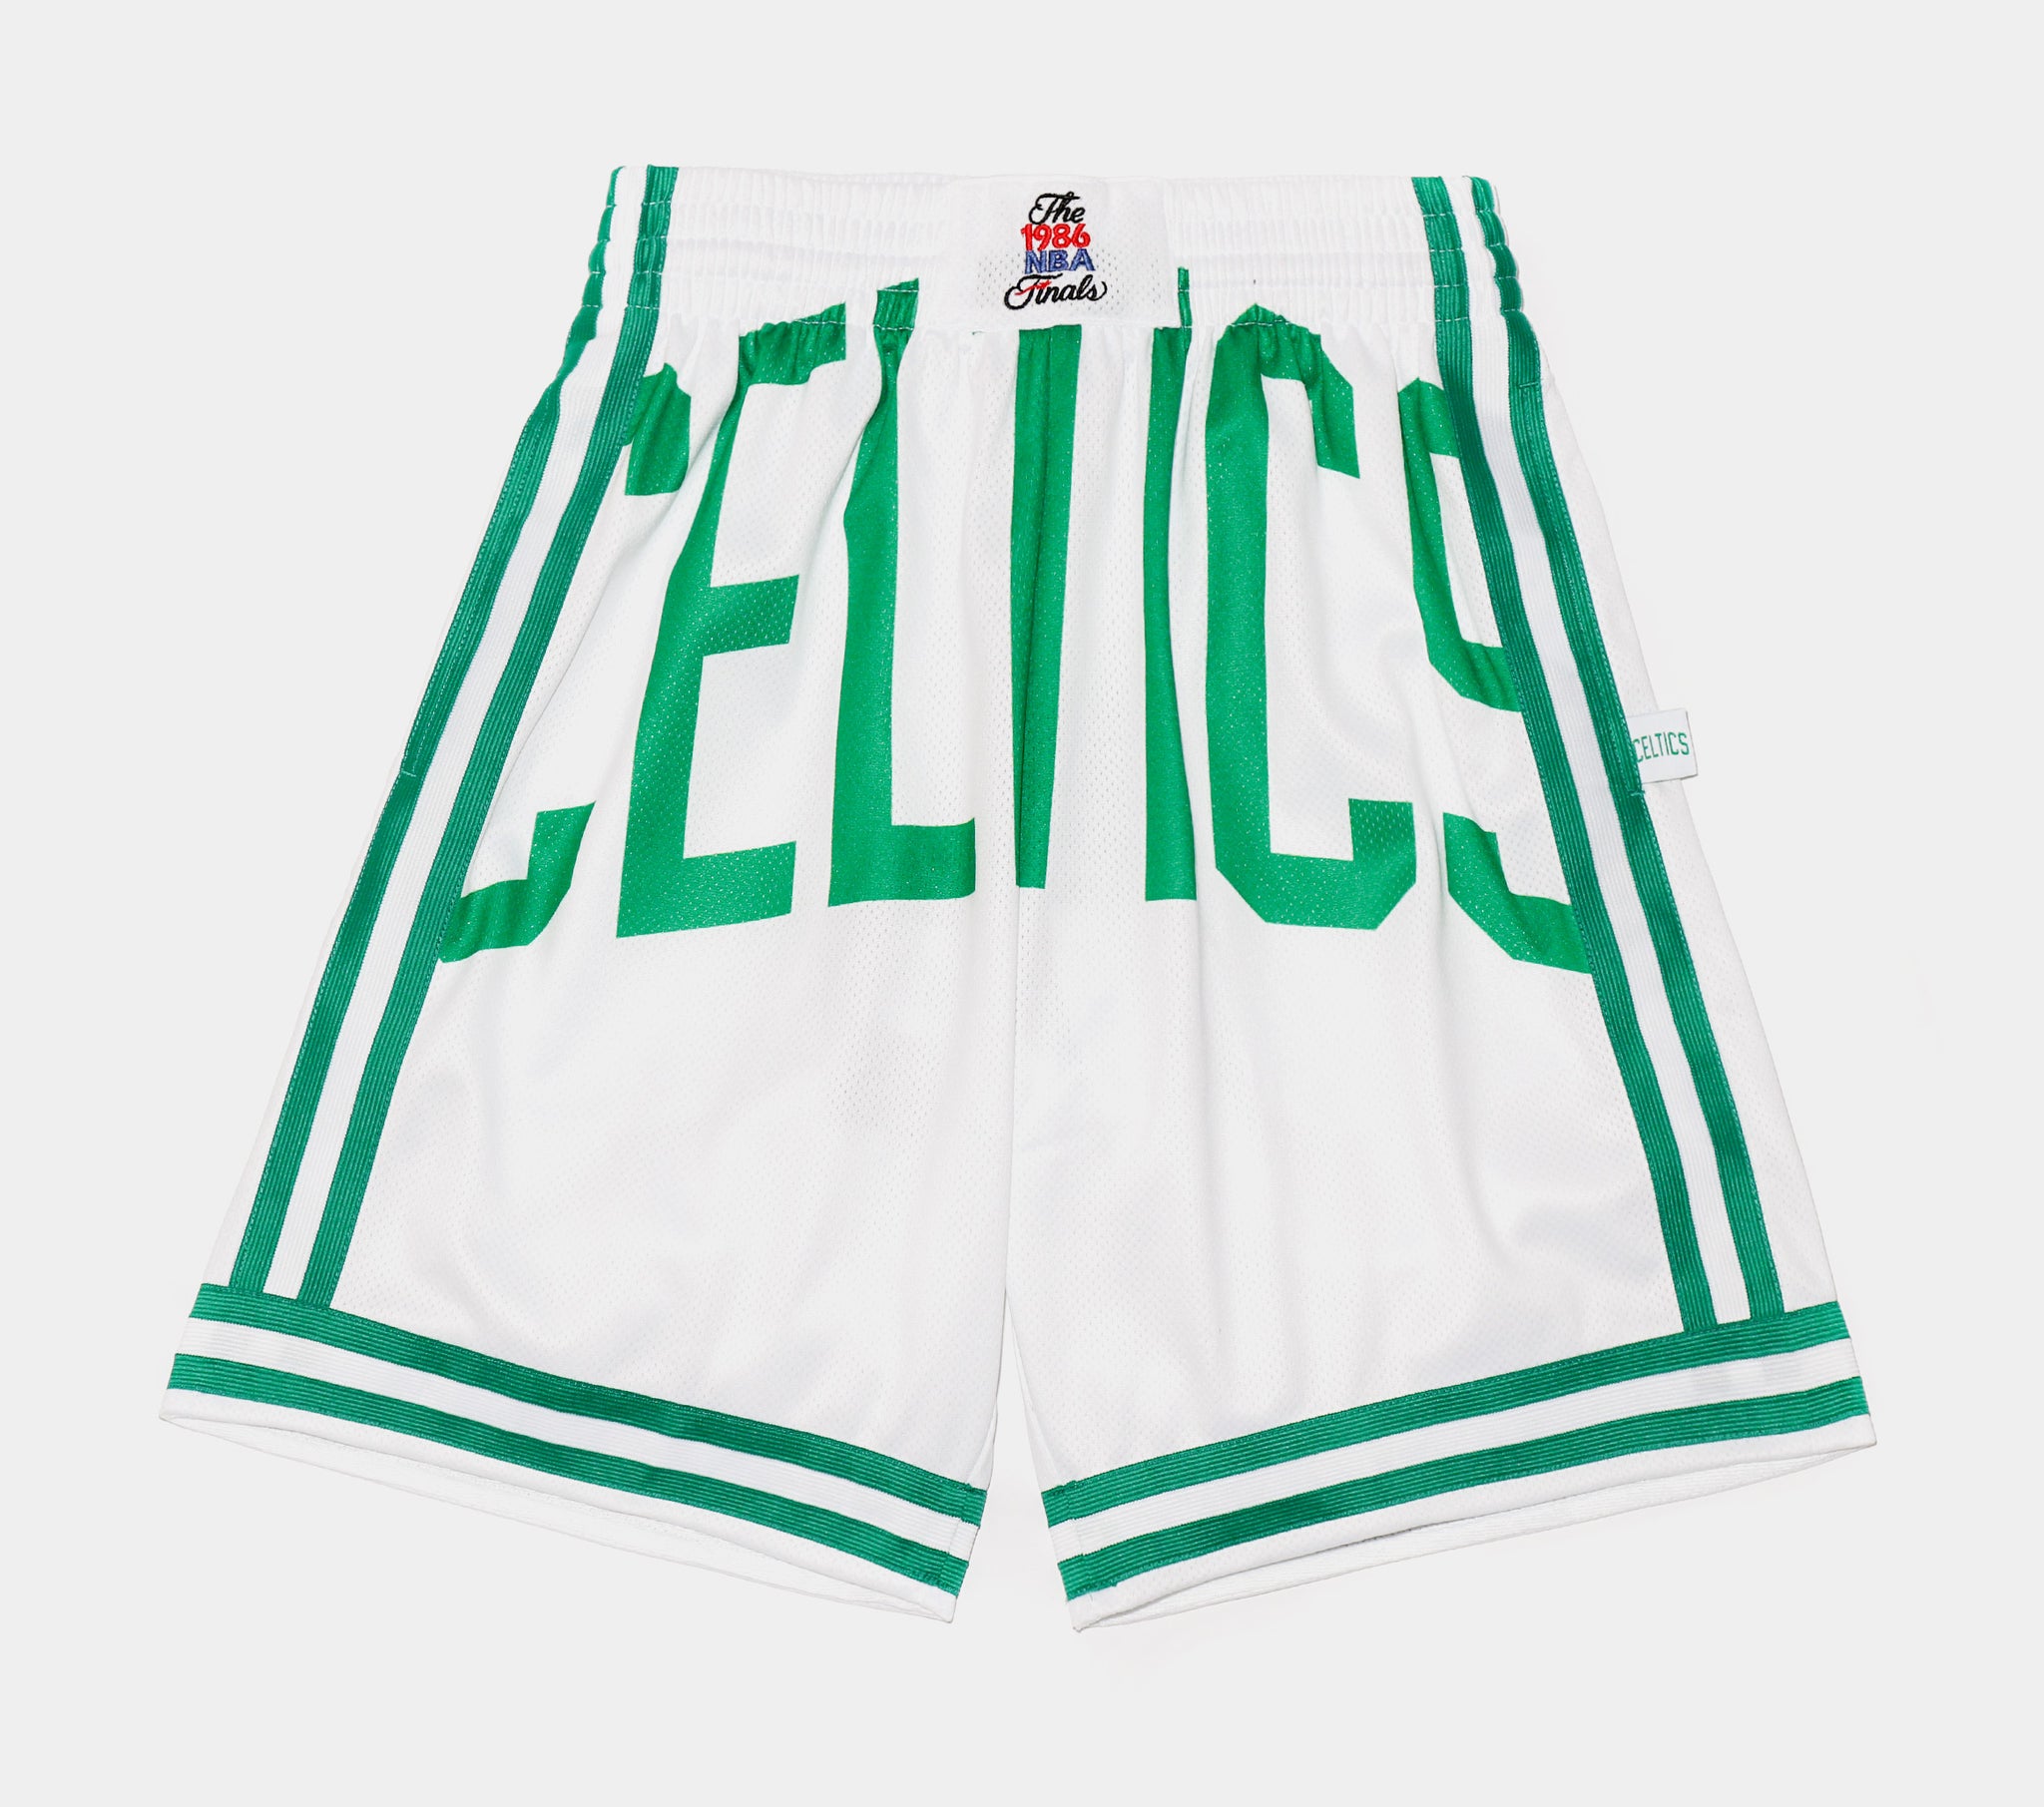 MITCHELL AND NESS City Collection Boston Celtics Mesh Shorts